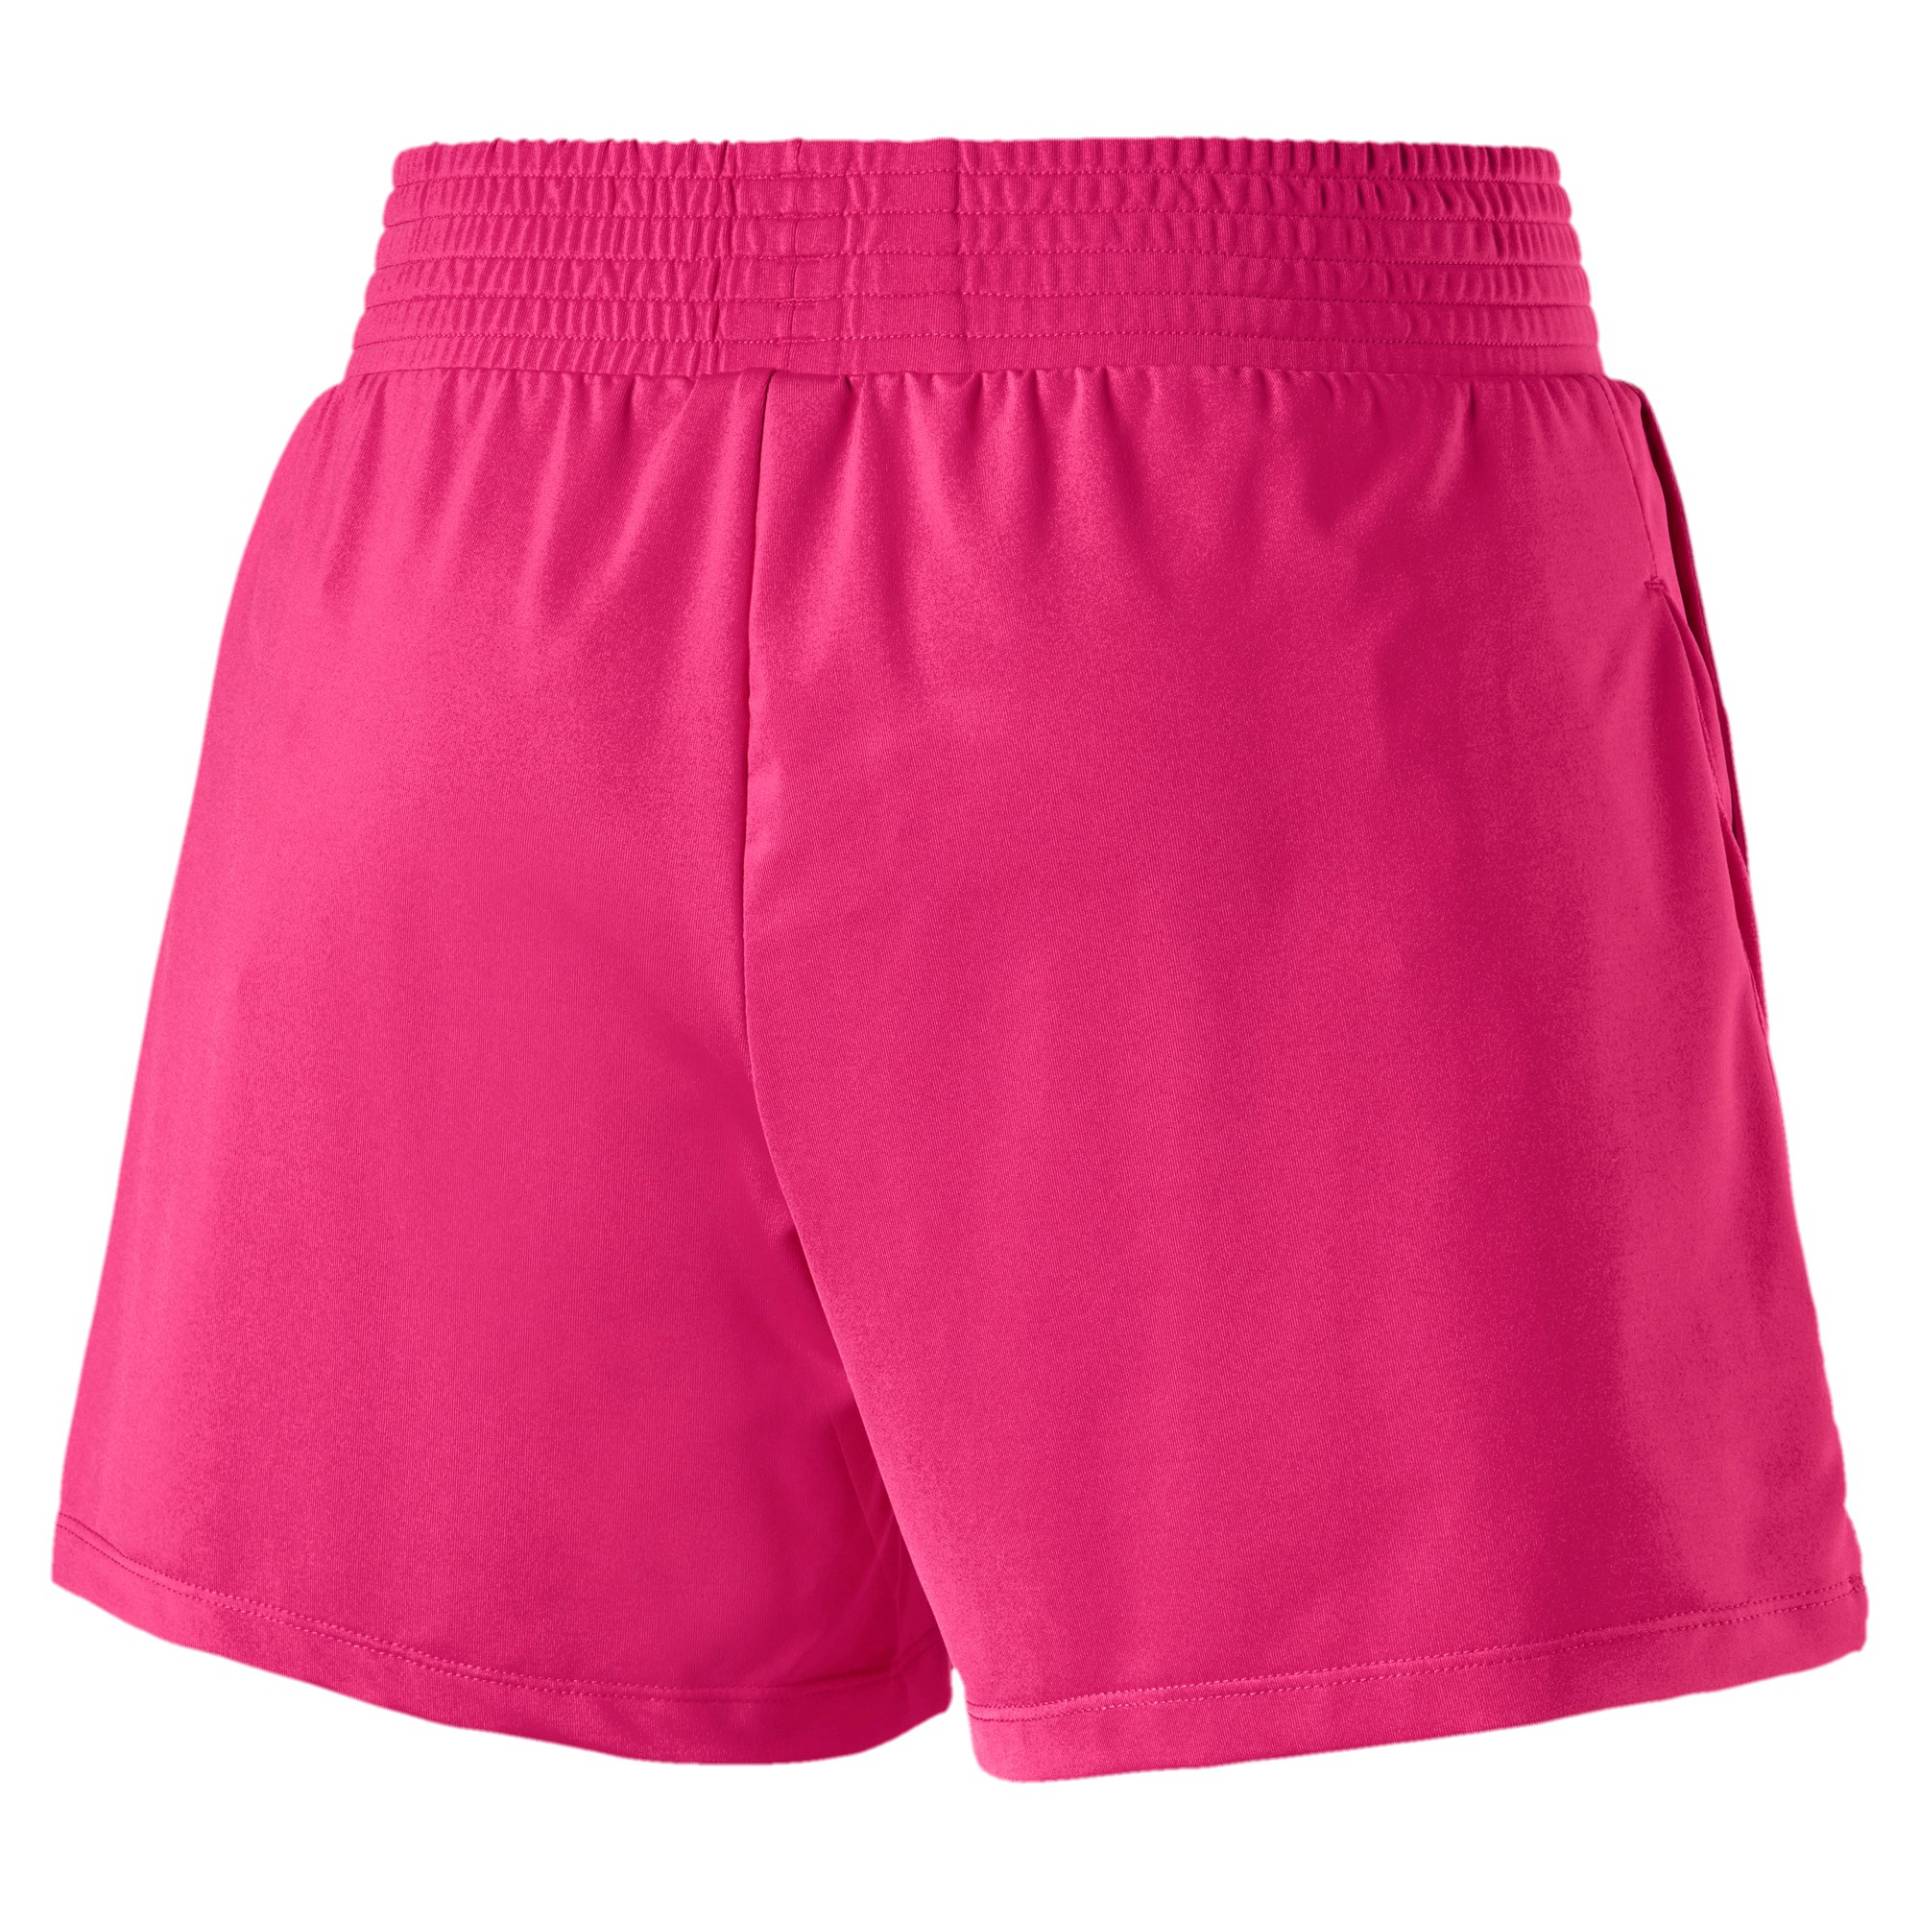 PUMA Damen Soft Sport Shorts Pant Hose Pants Fitnesshose 854330 20 pink S von PUMA